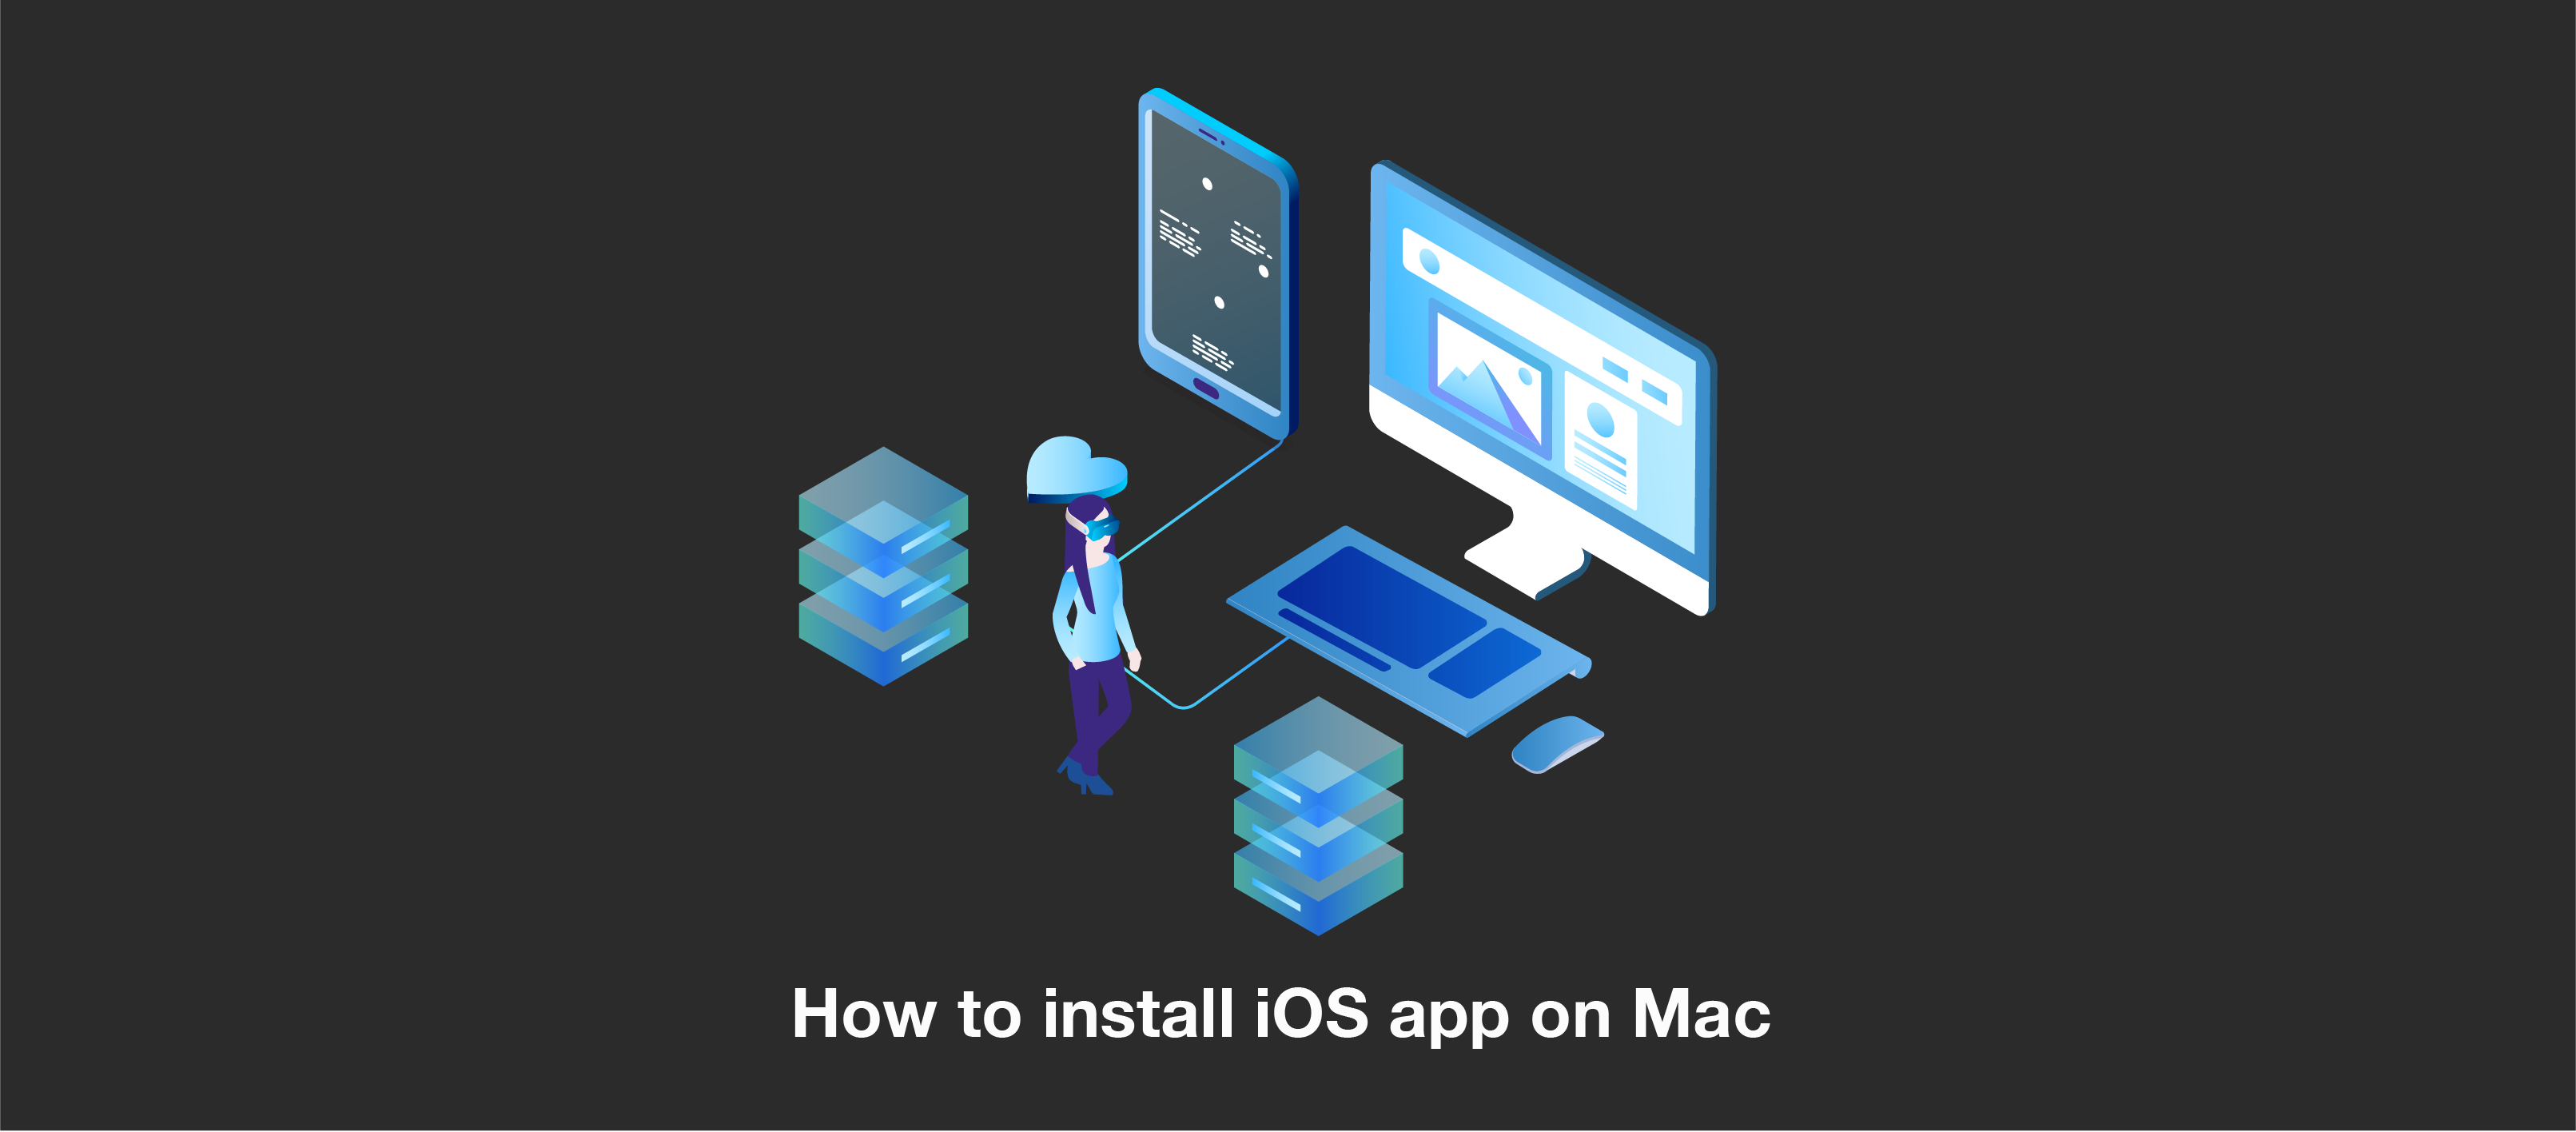 zink app for mac